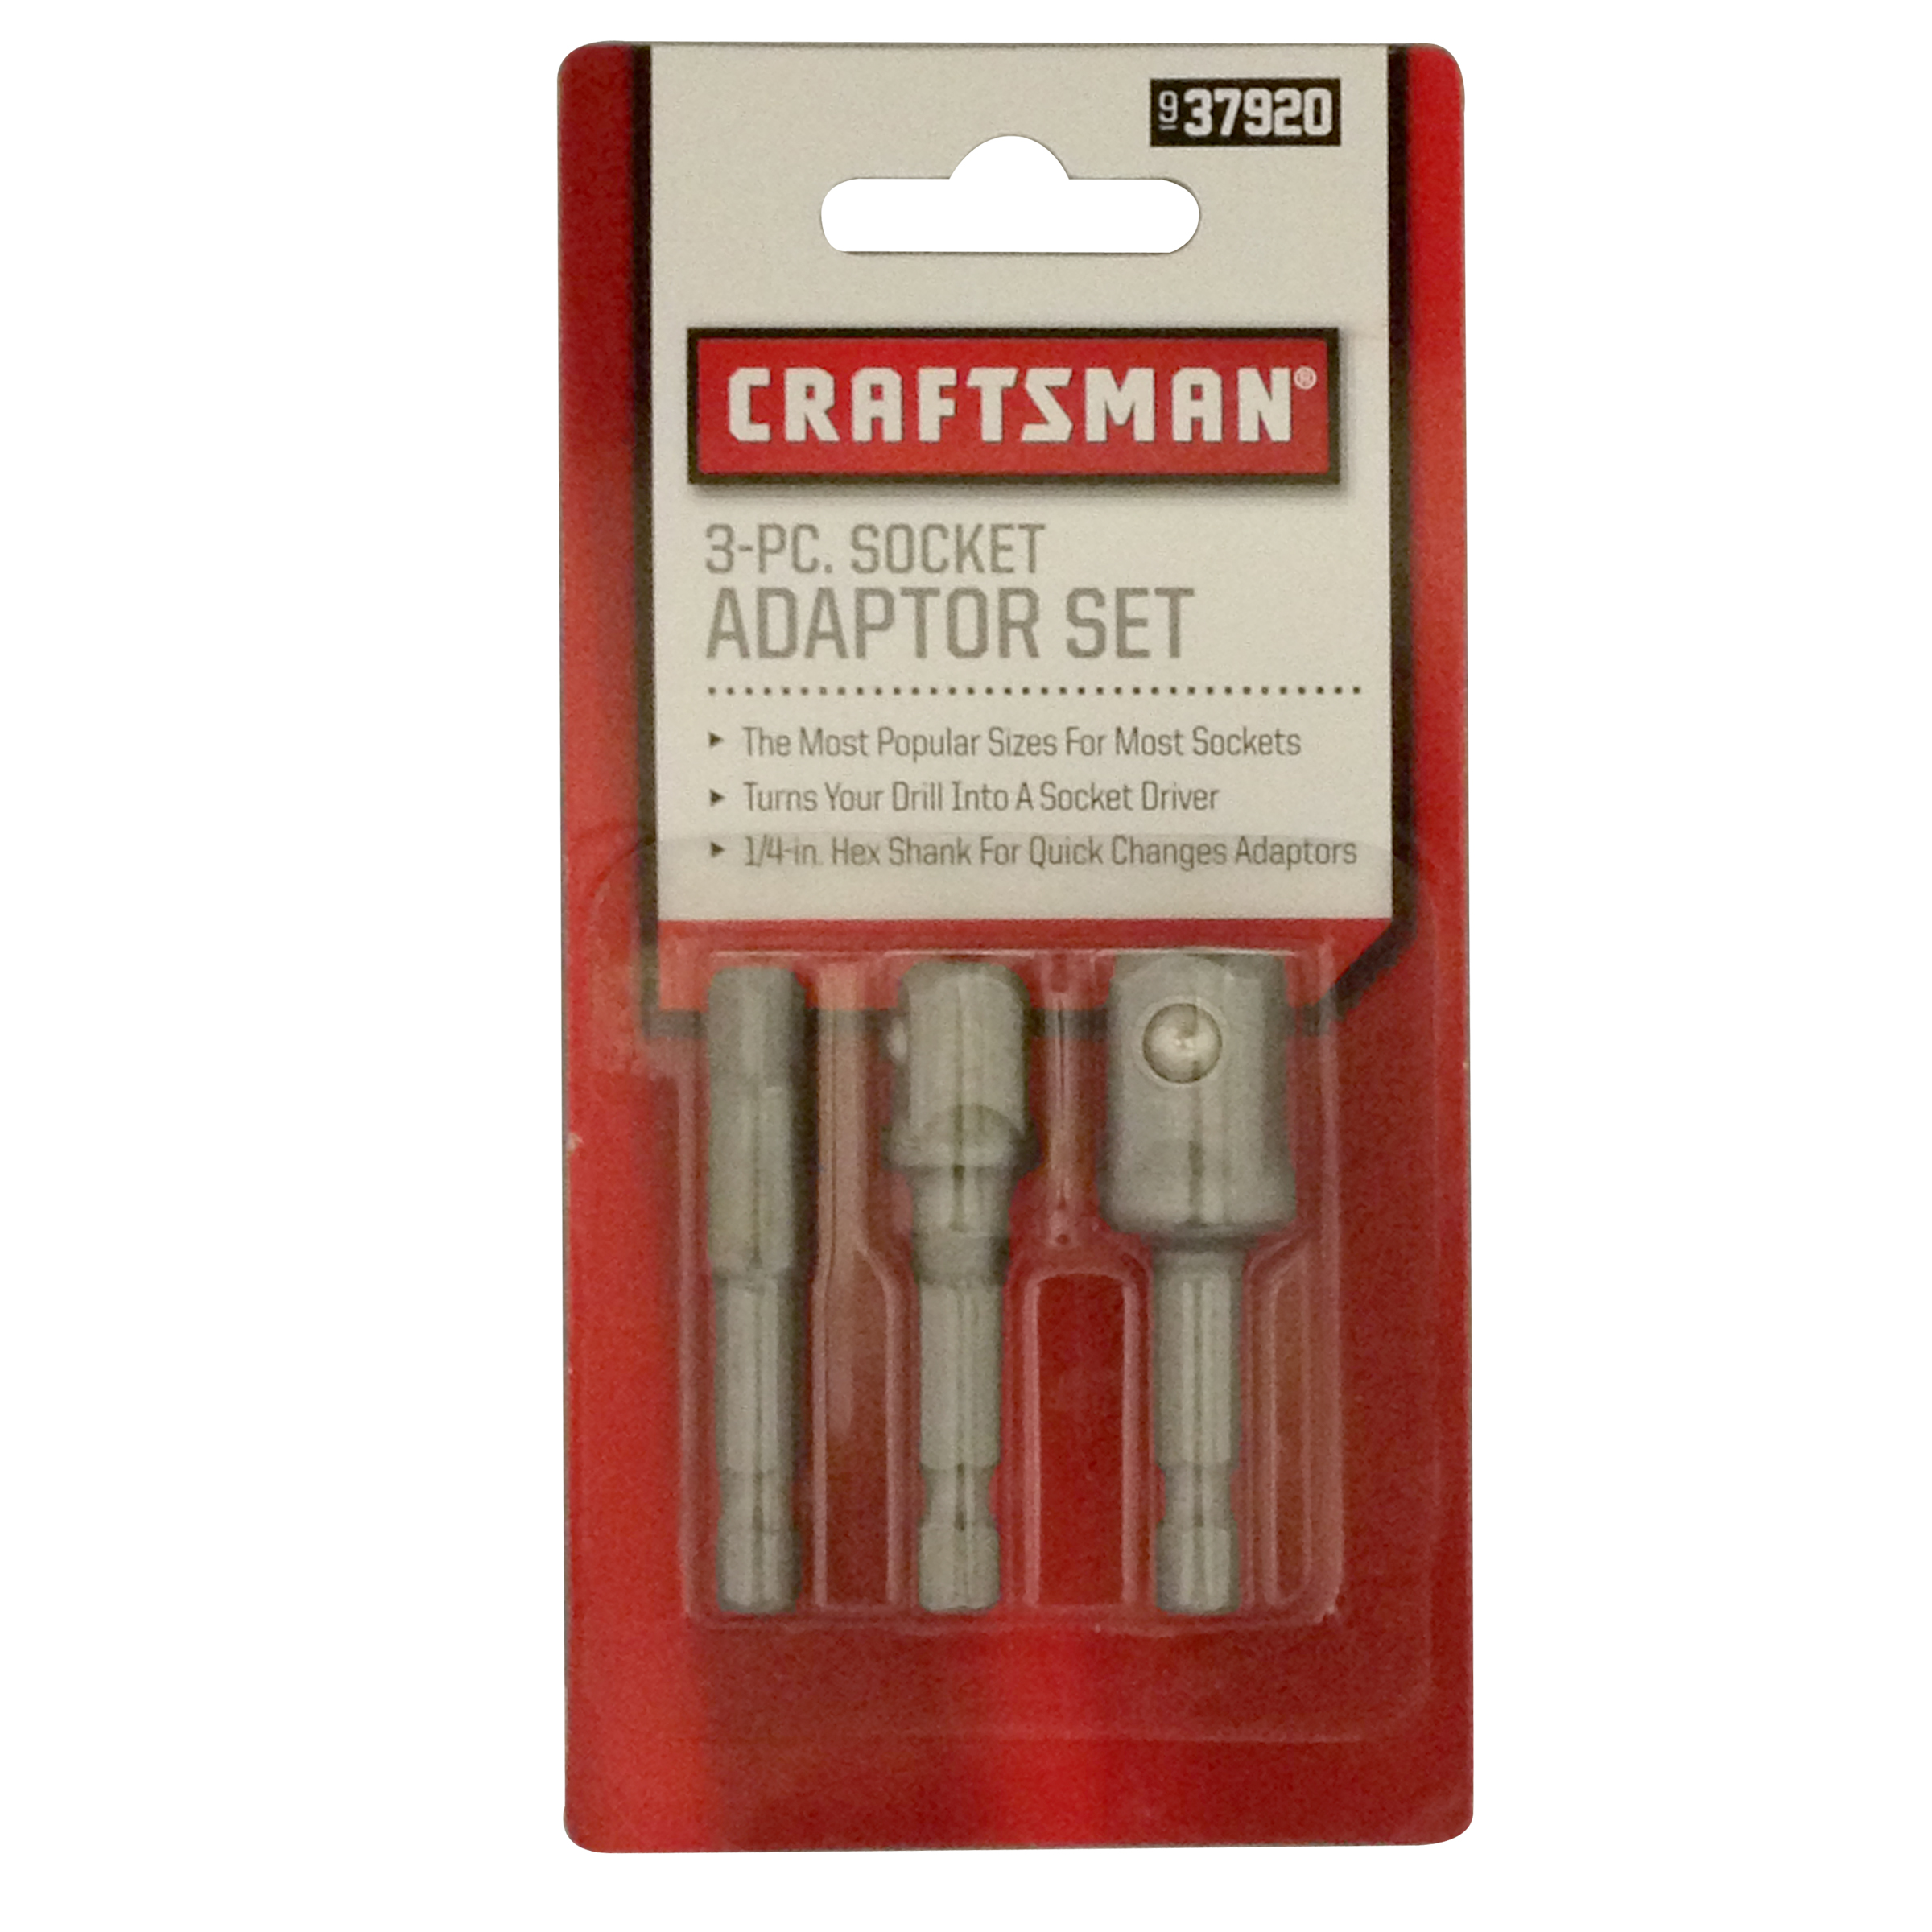 Craftsman 3pc. Socket Adaptor Set